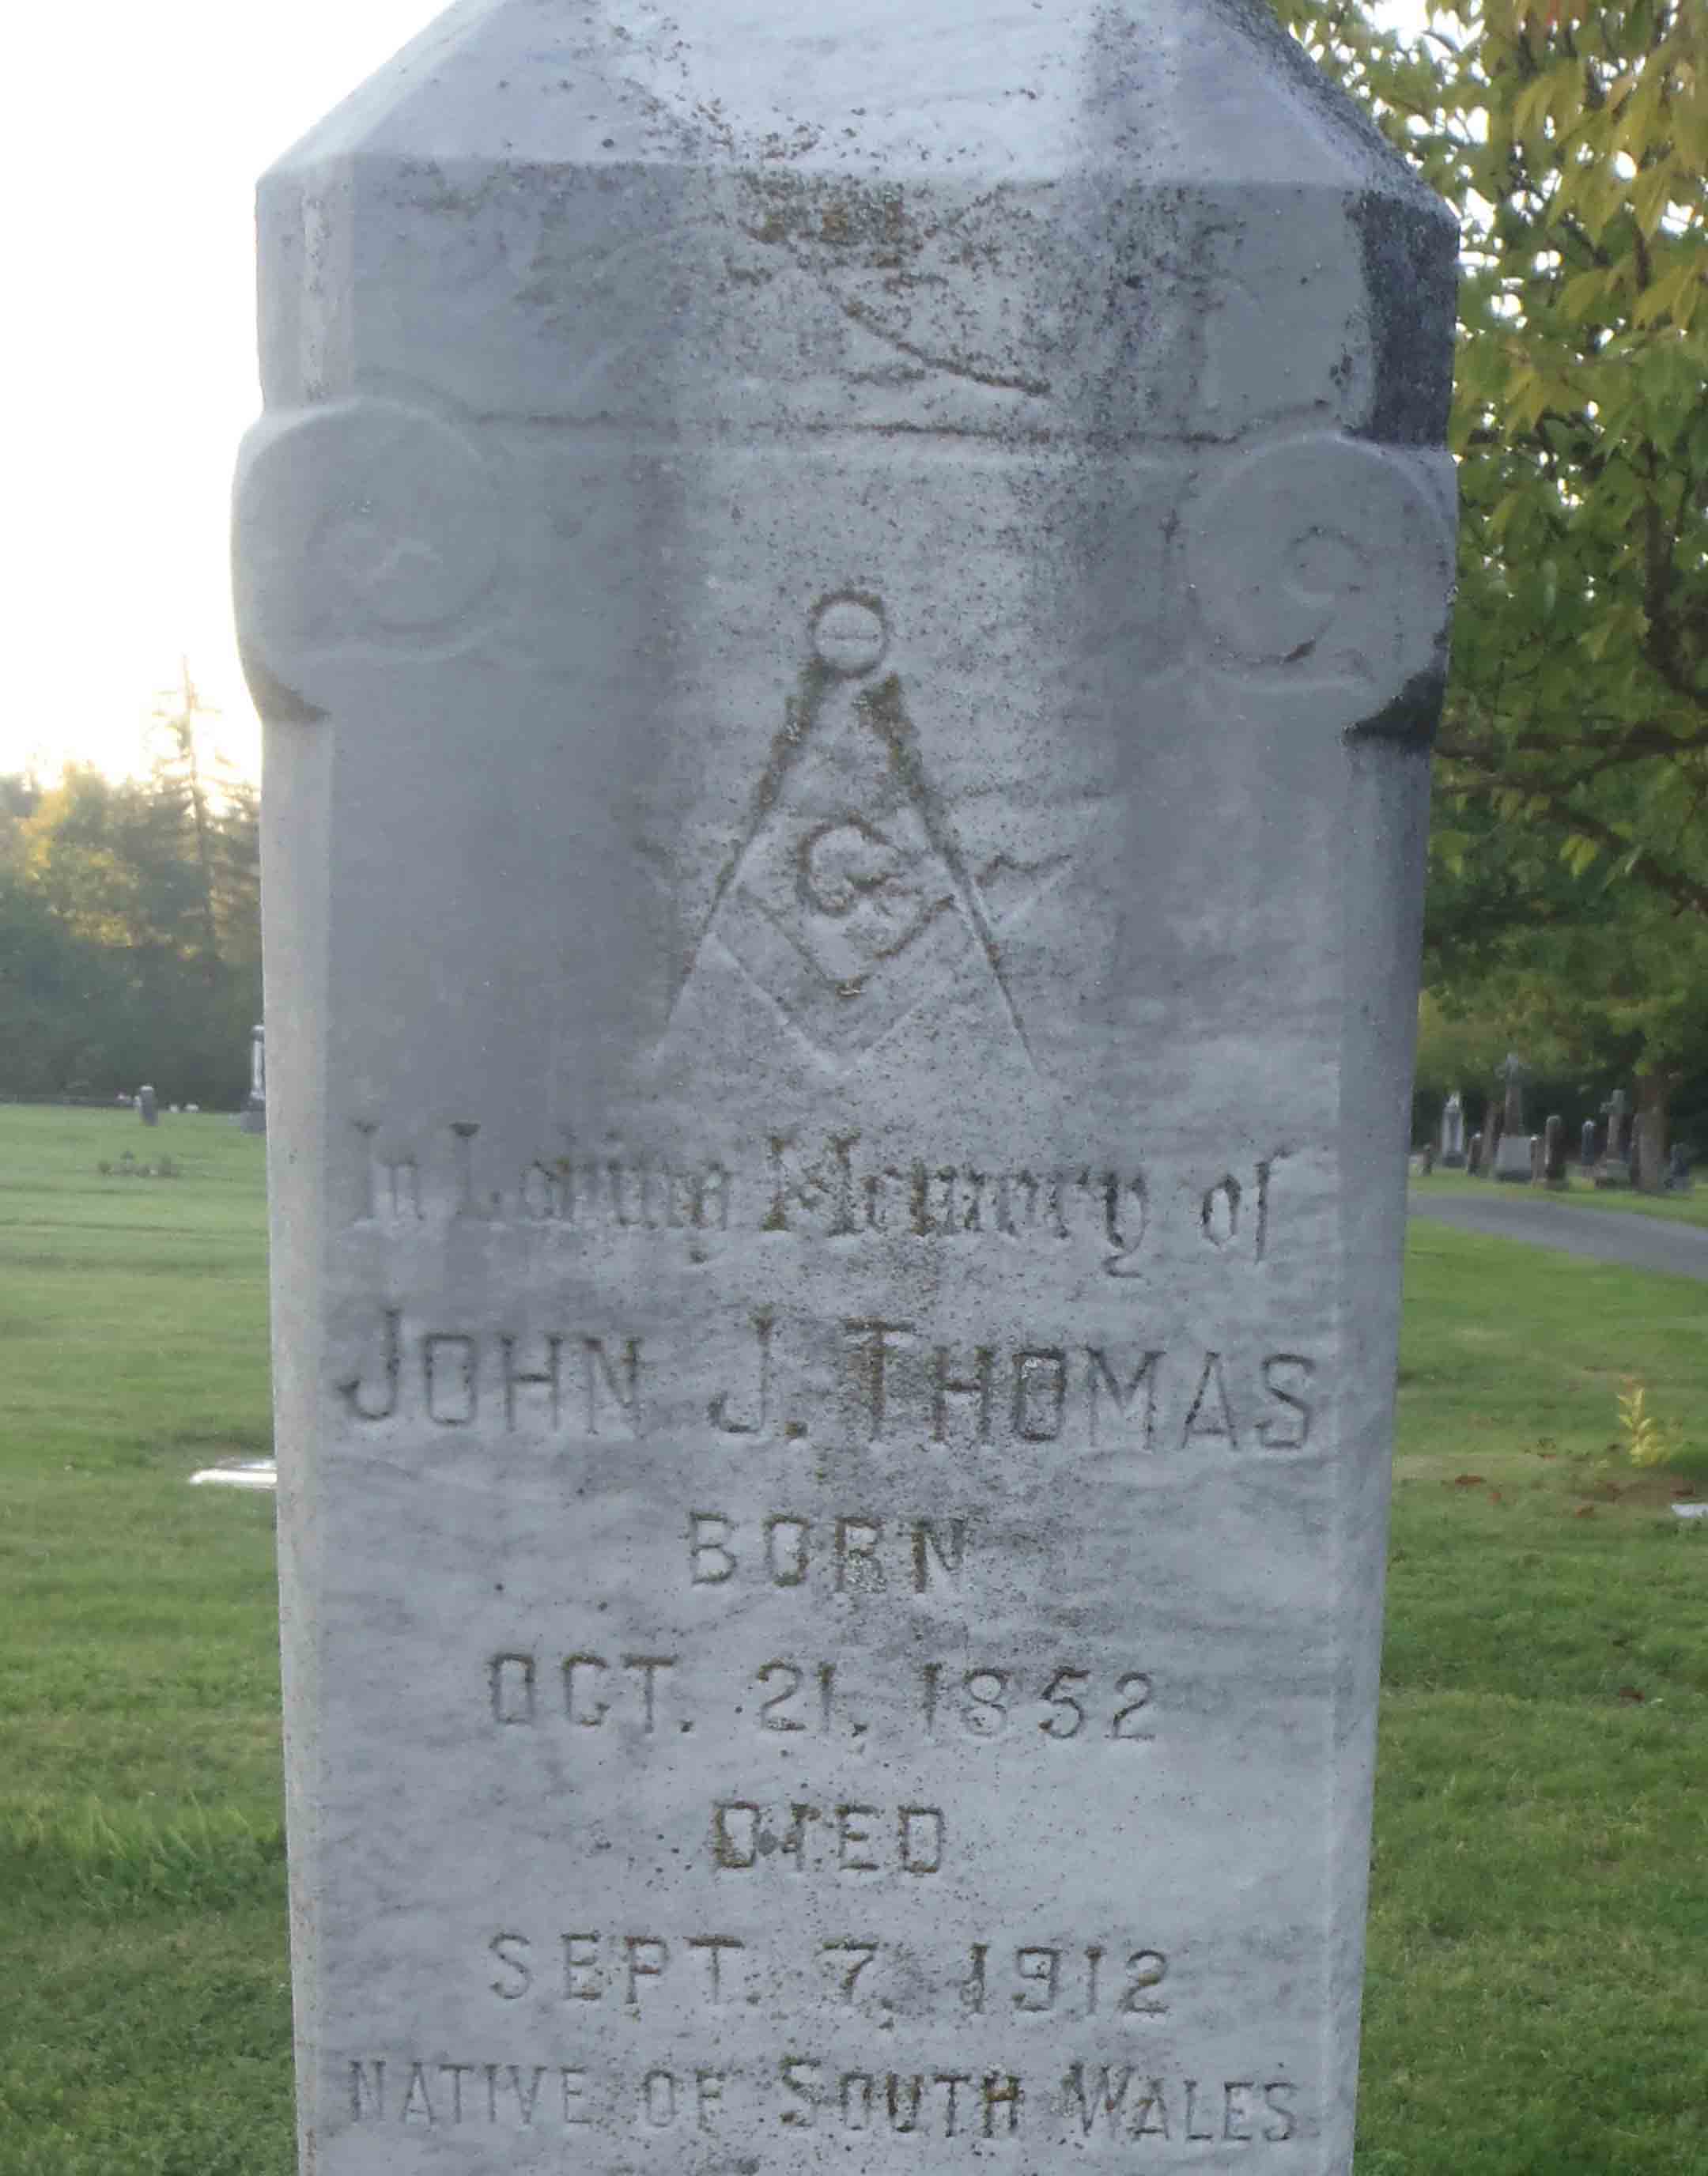 John Thomas gravestone inscription